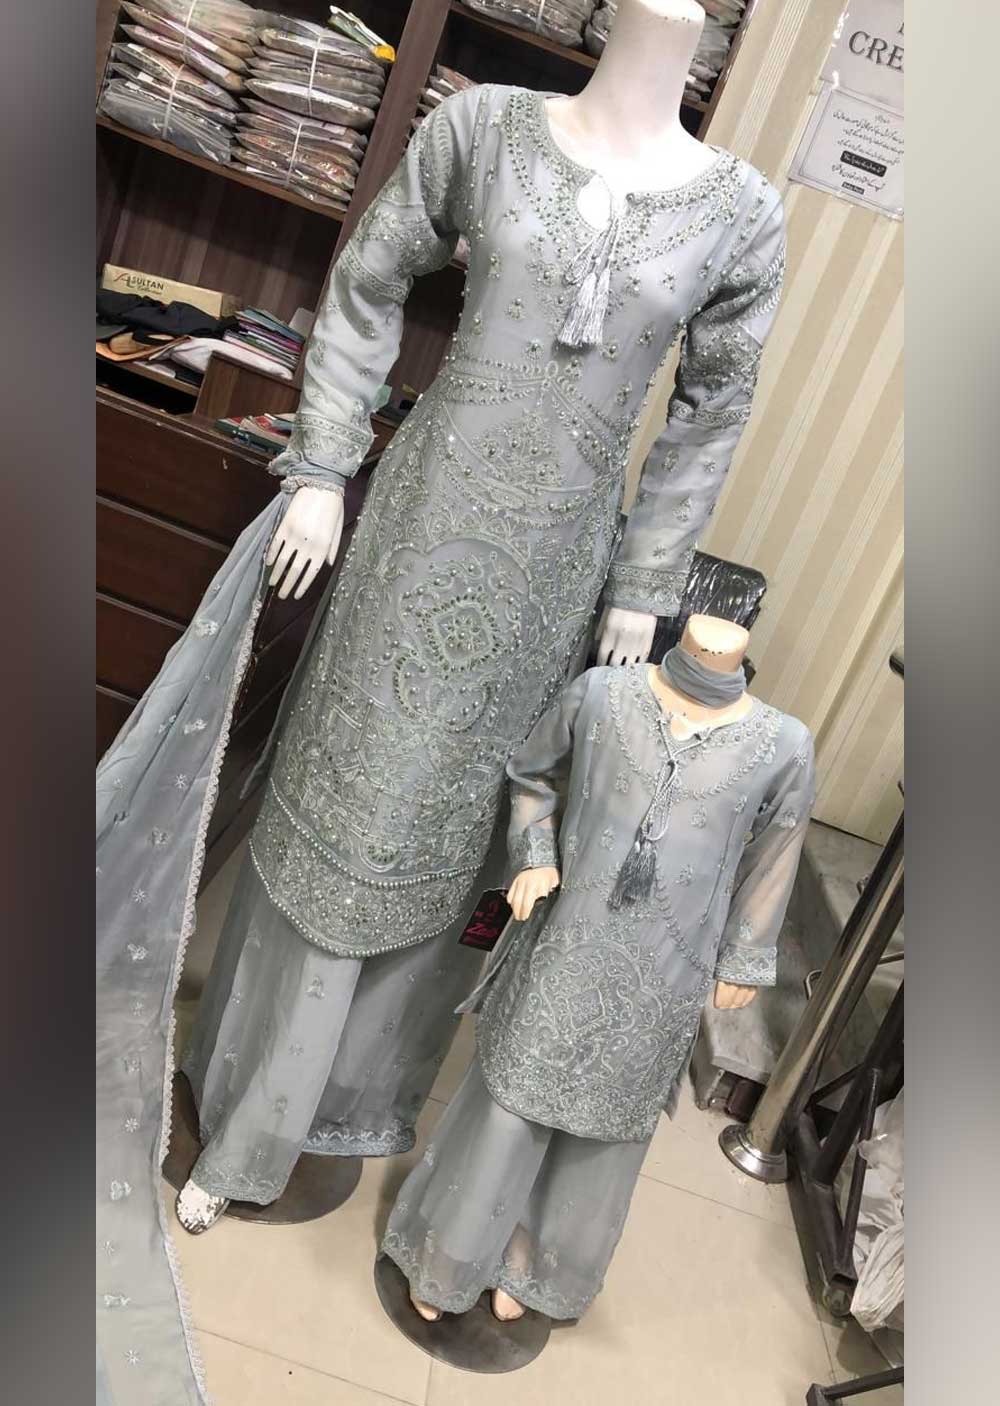 SHAZ6571 Grey Readymade Mother & Daughter Dress - Memsaab Online